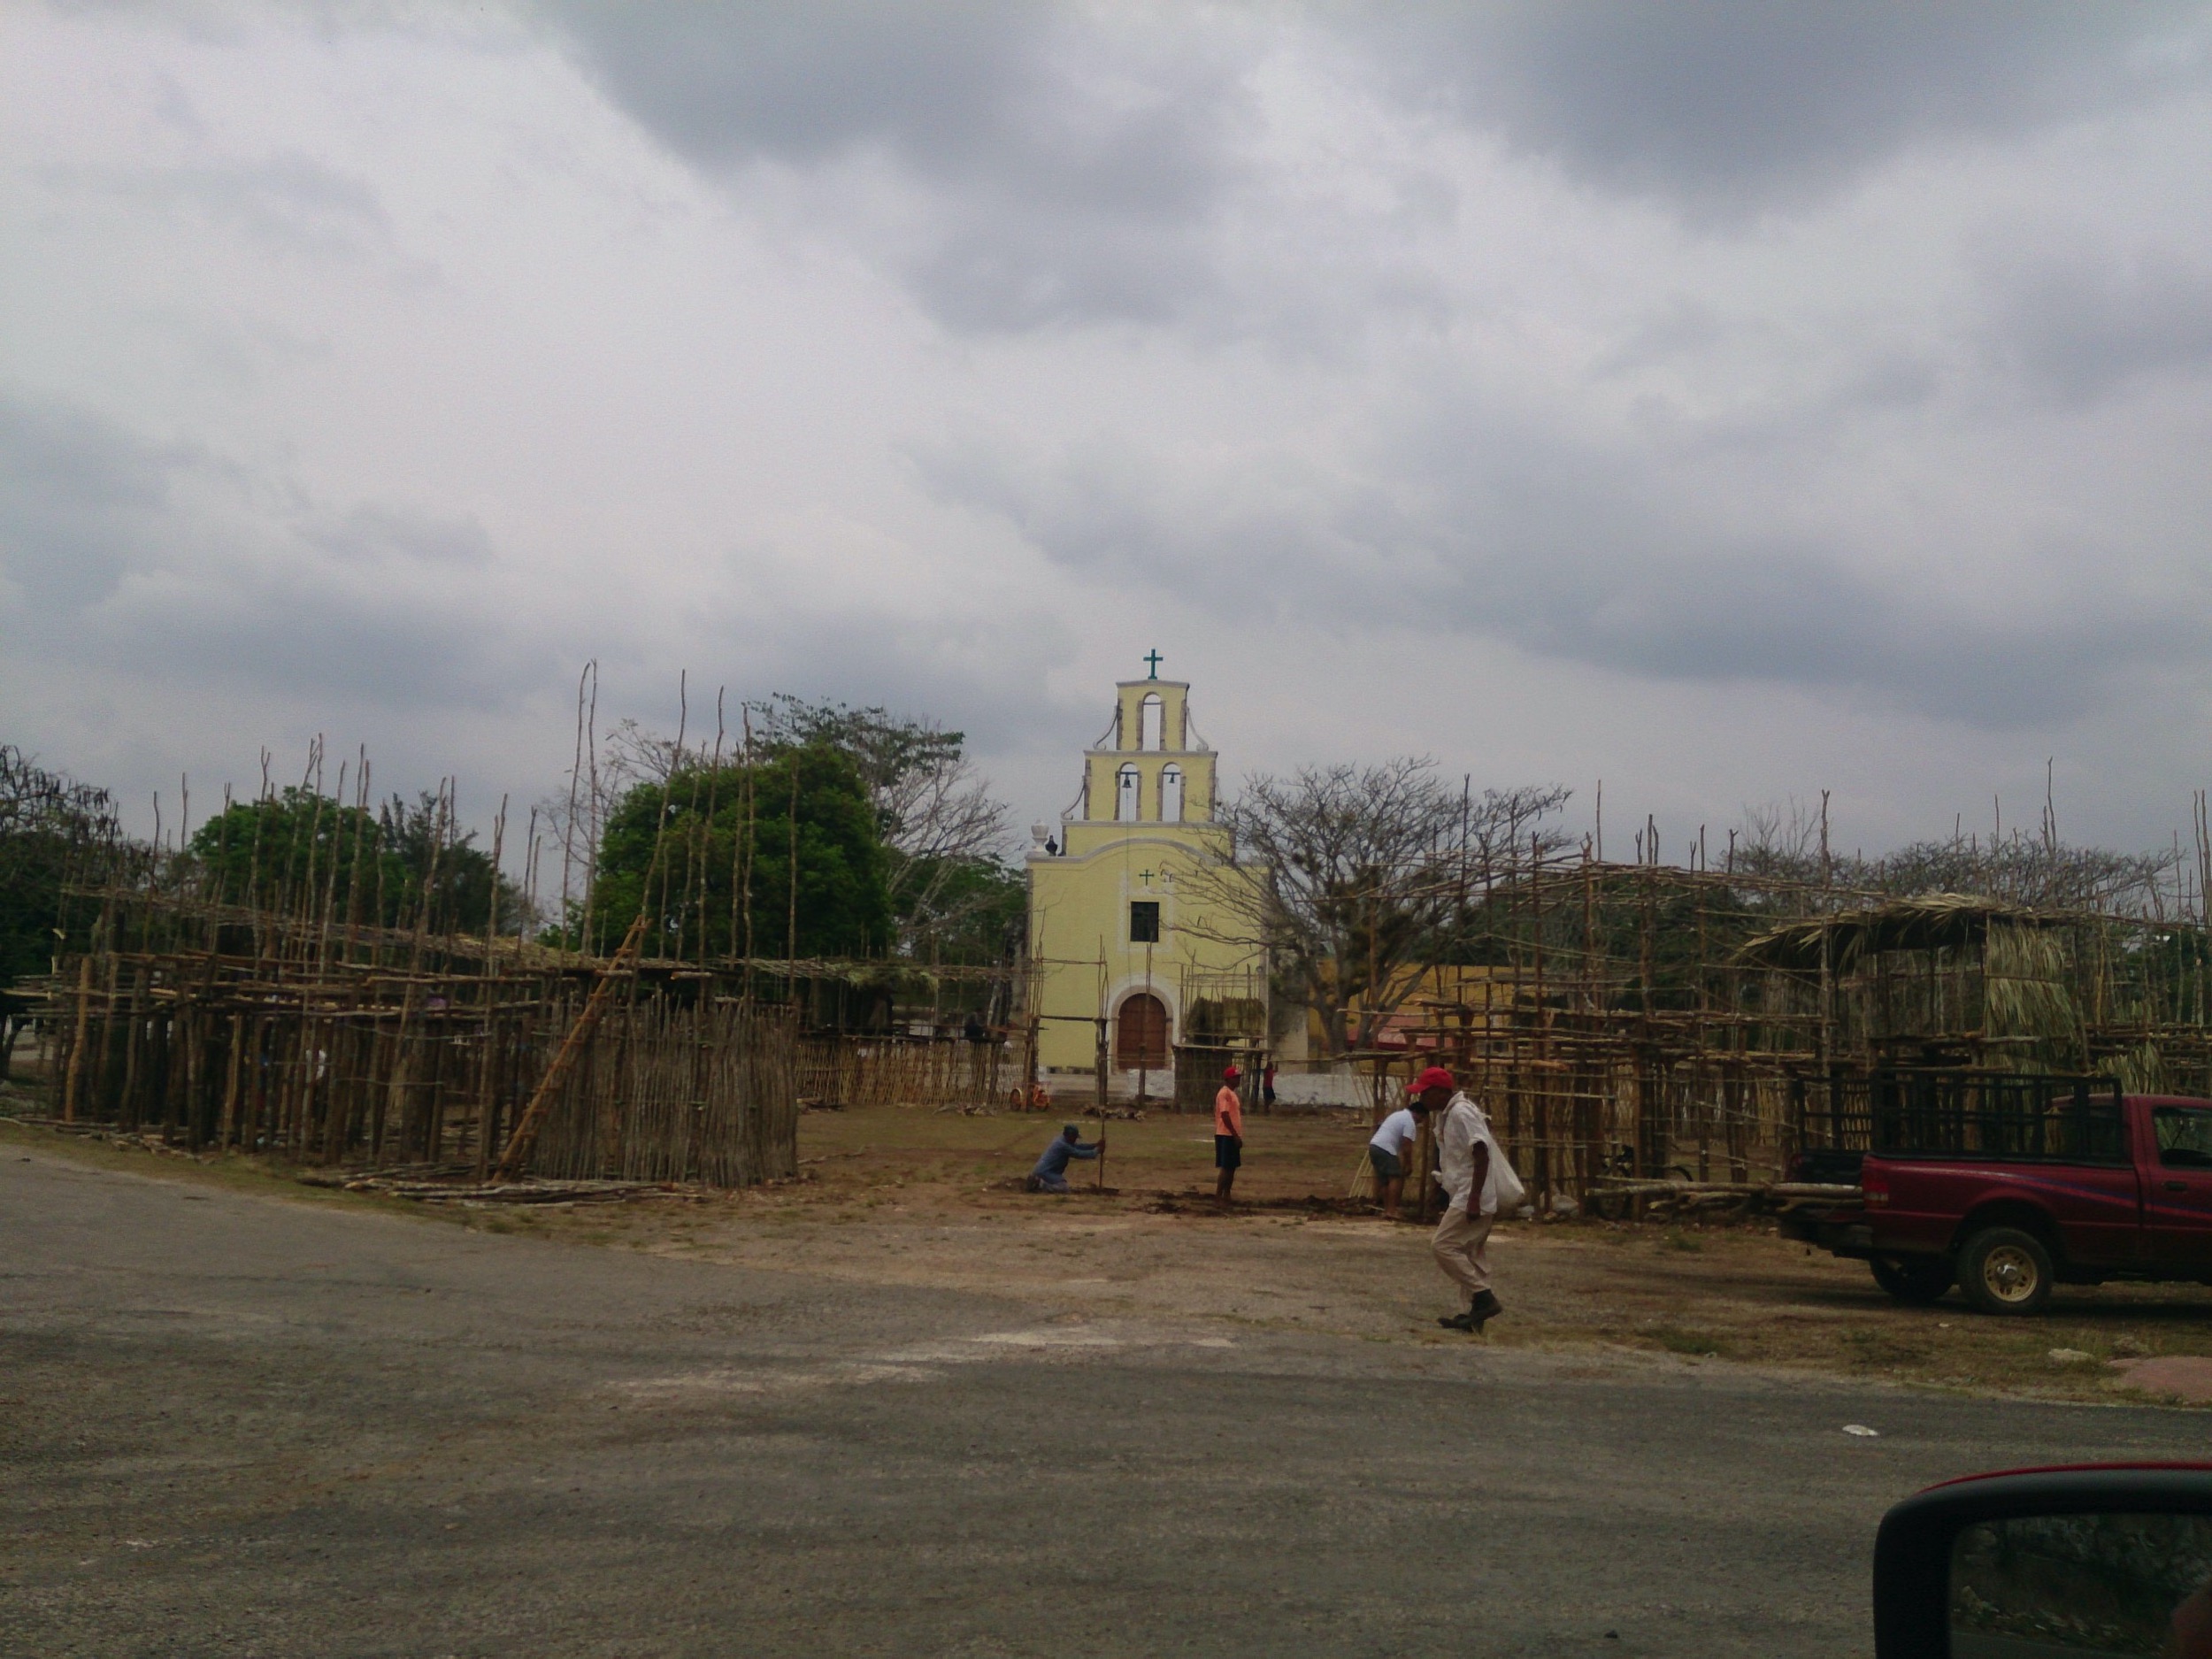 Church at Kancabdzonot, Yucatán, Mexico.jpg